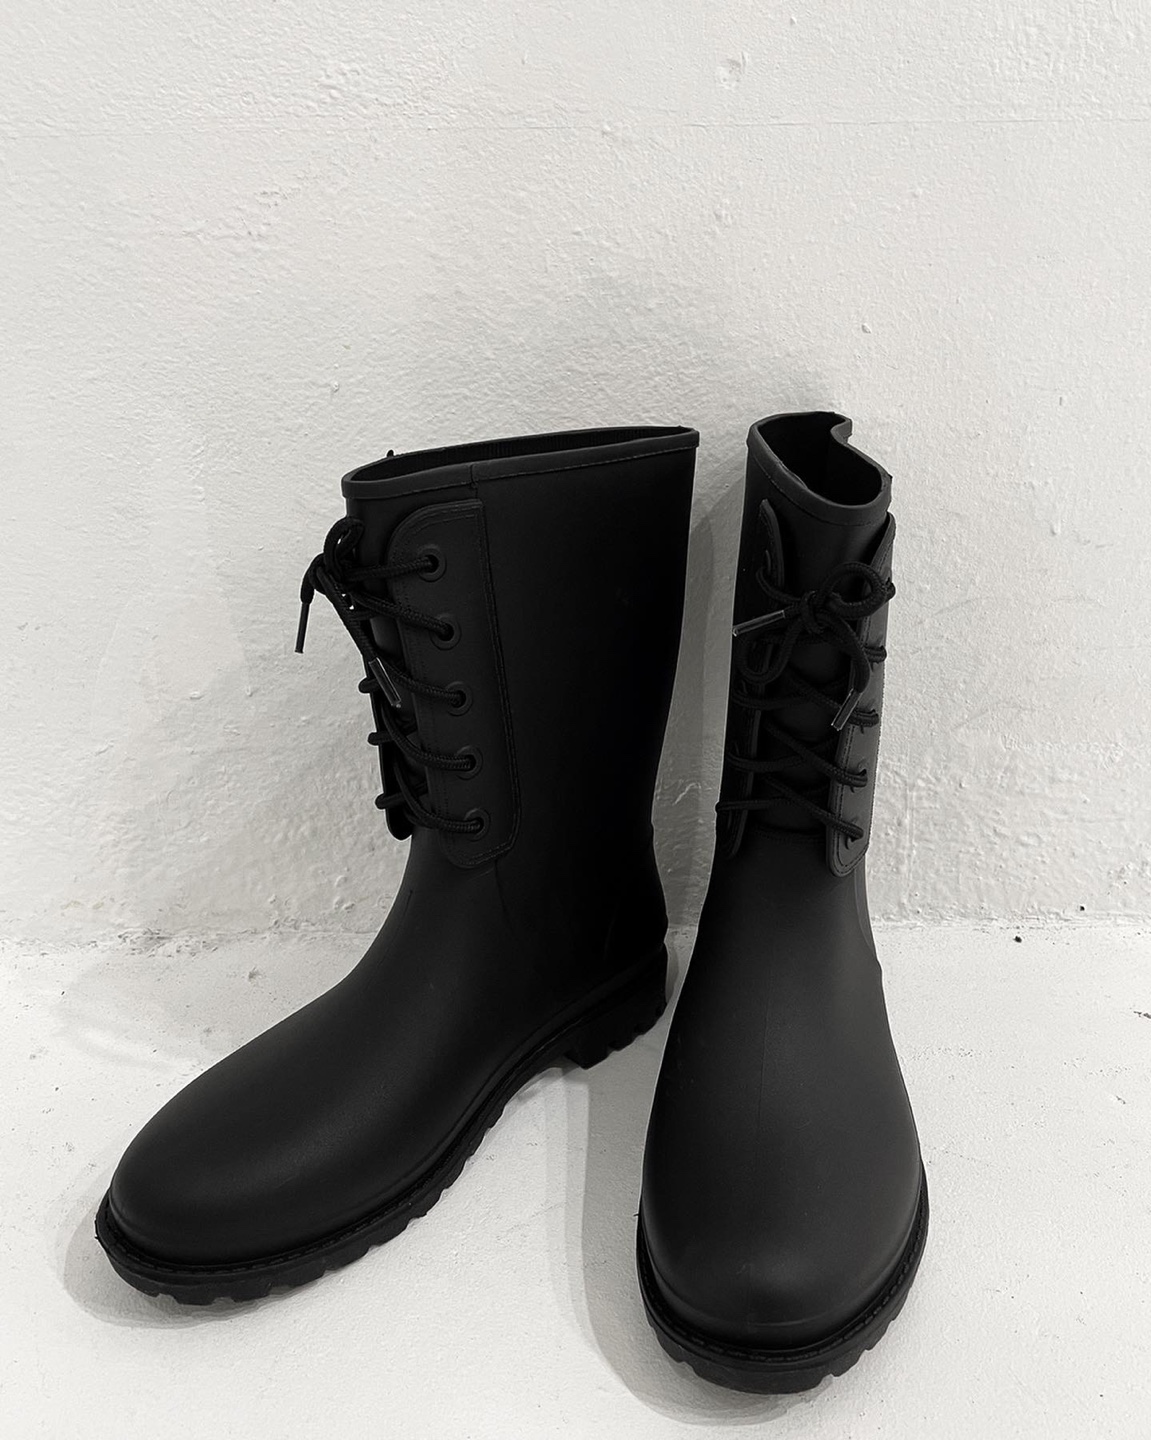 Muse rain boots